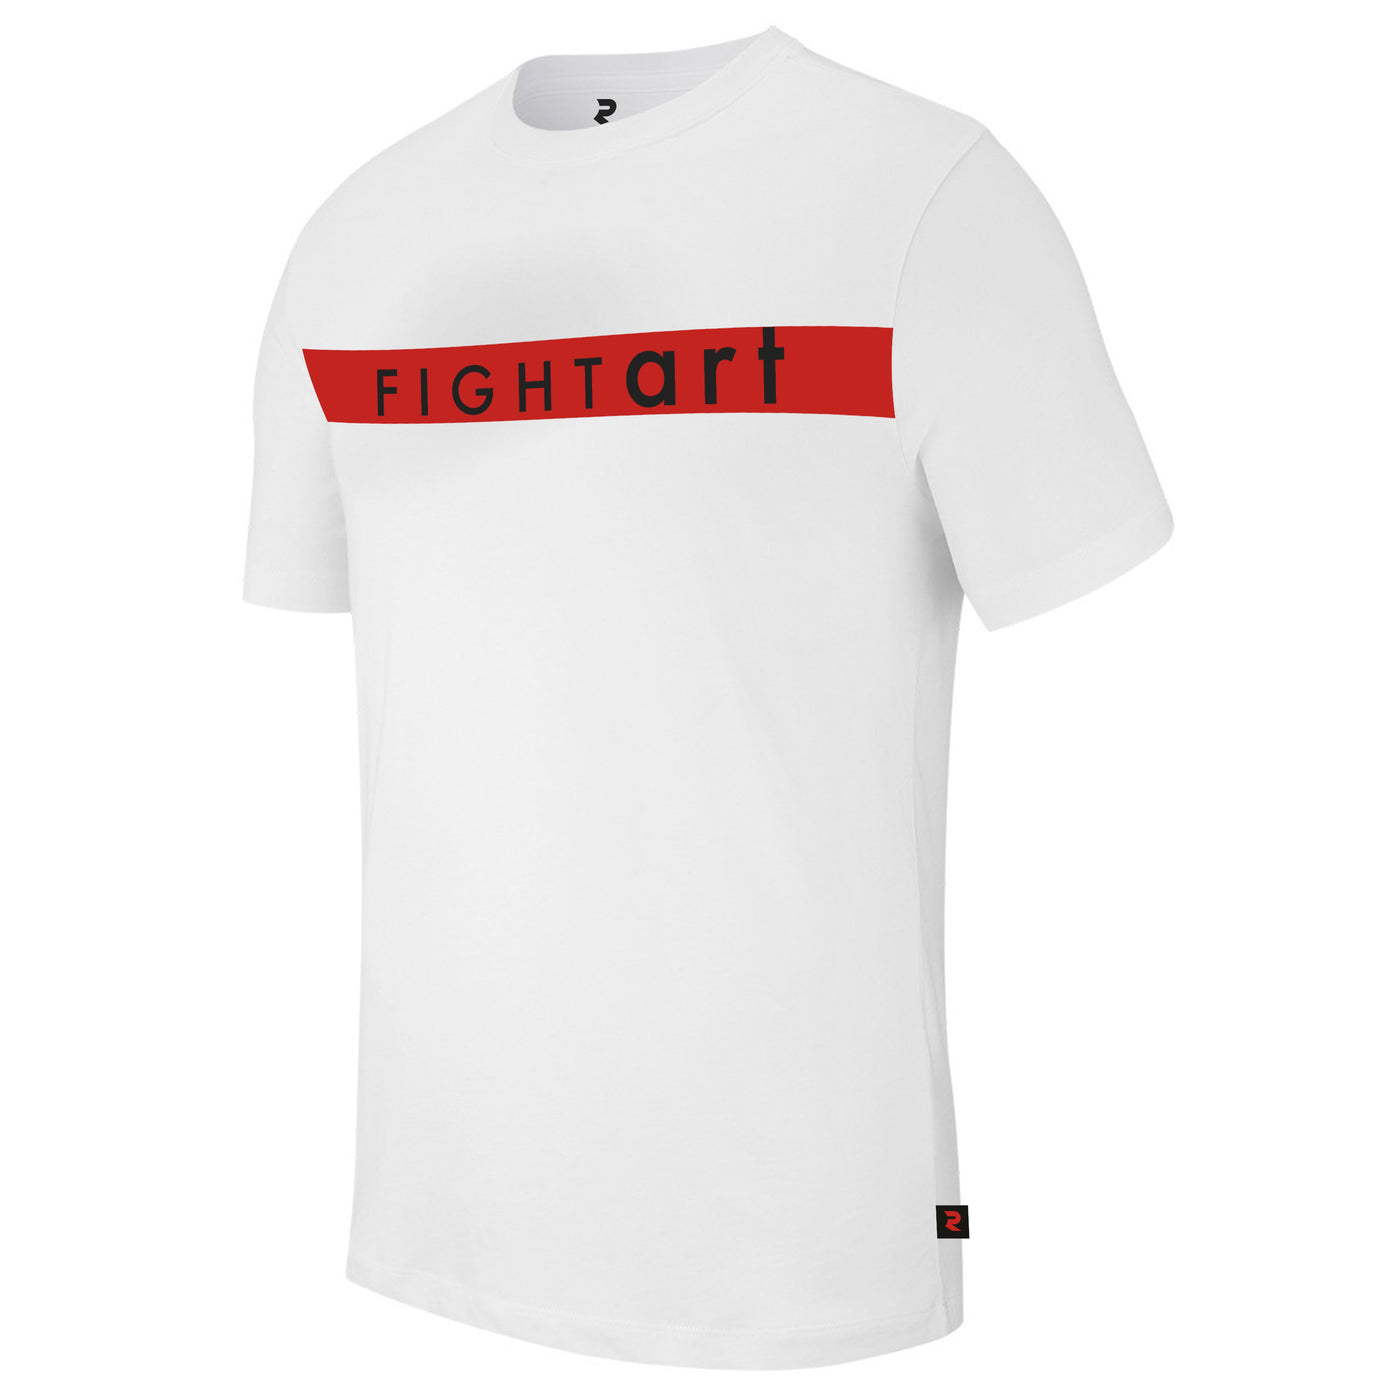 FightArt T-Shirts